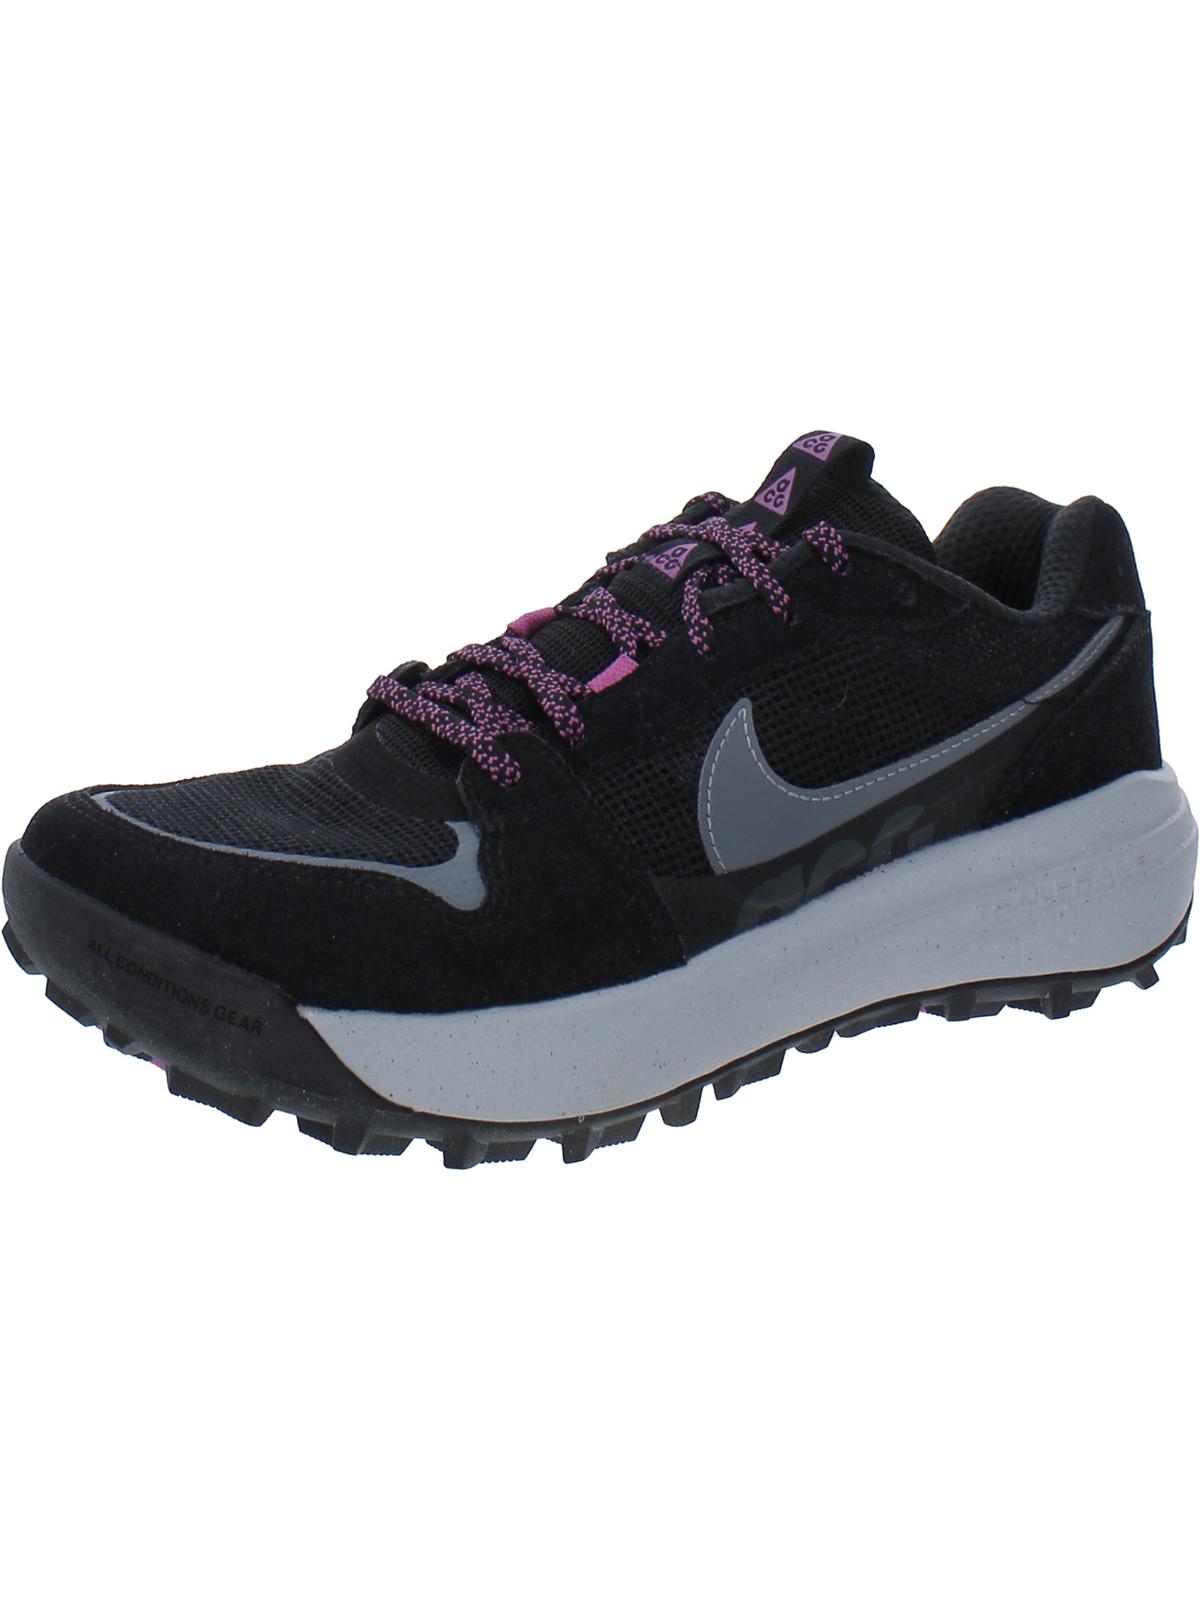 Nike Acg Lowcate Mens Hiking Walking Running & Training Shoes In Multi